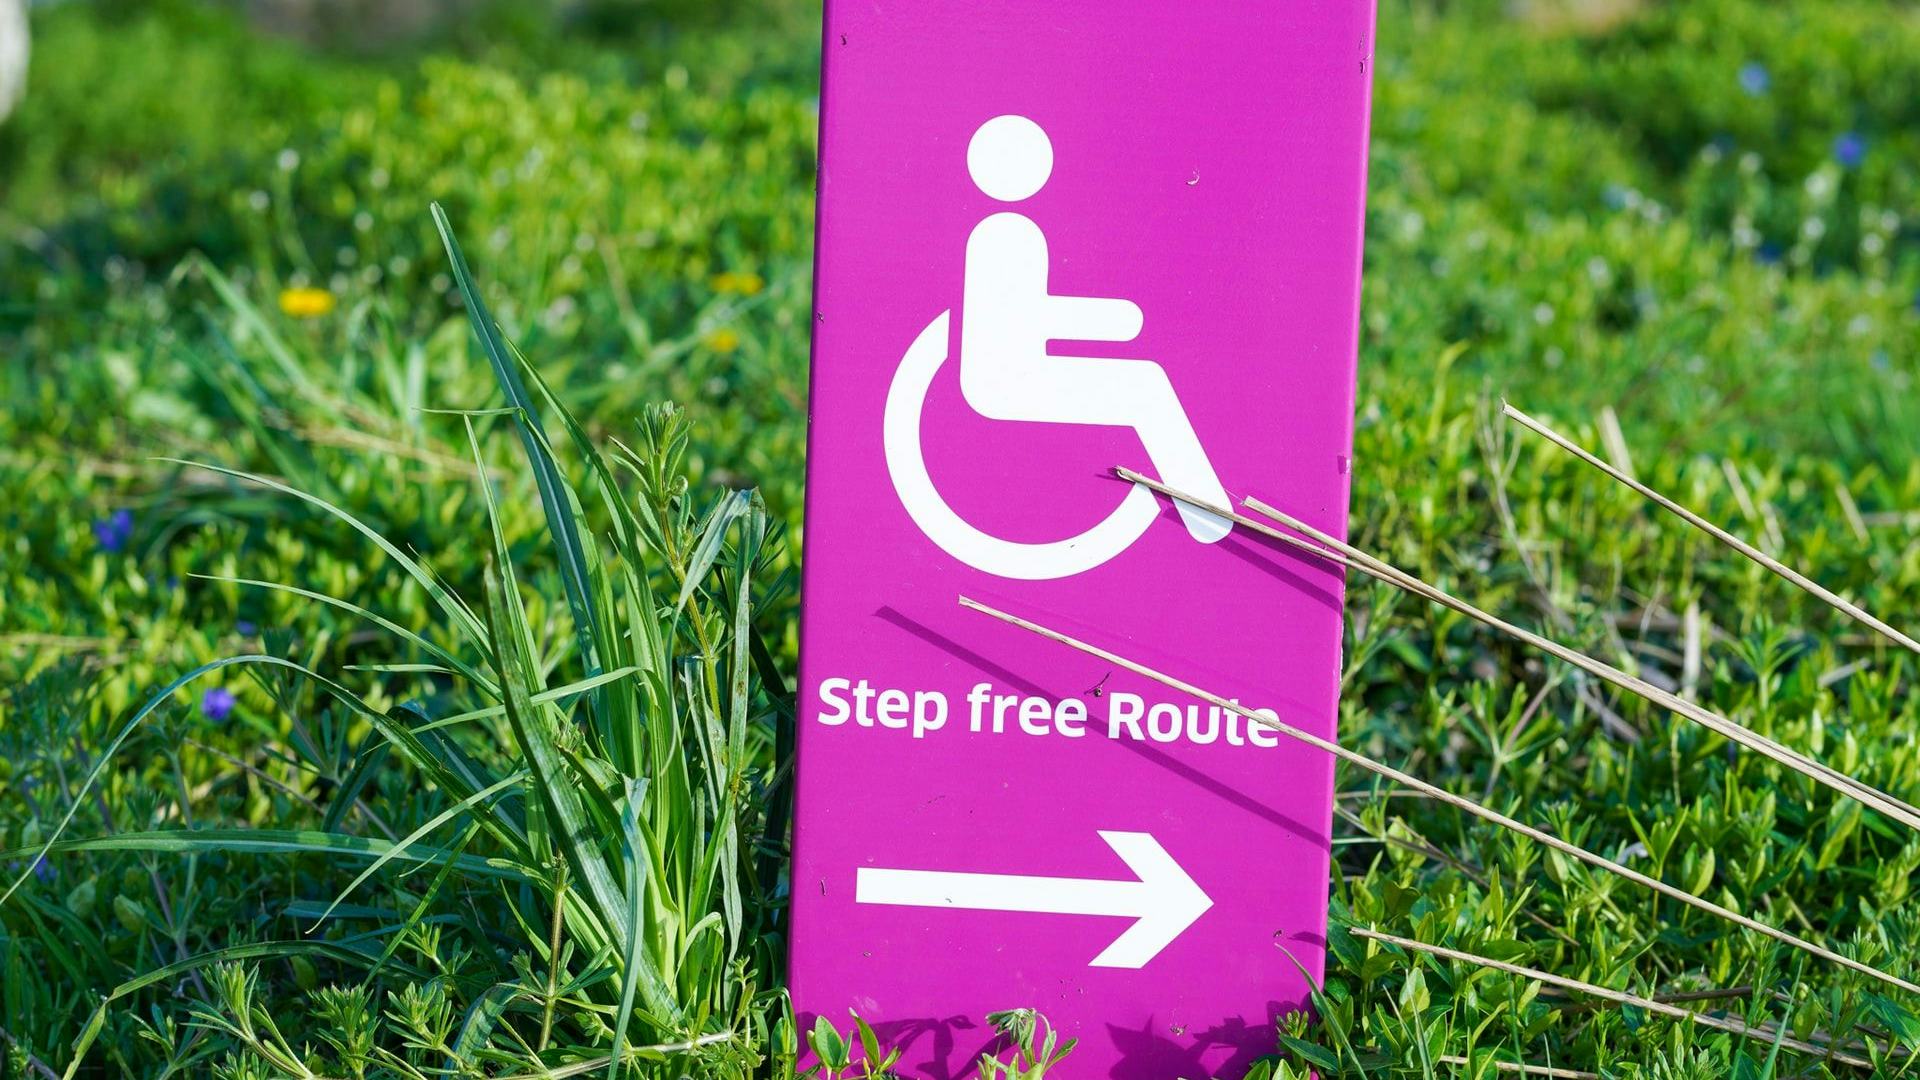 Wheelchair sign on grass